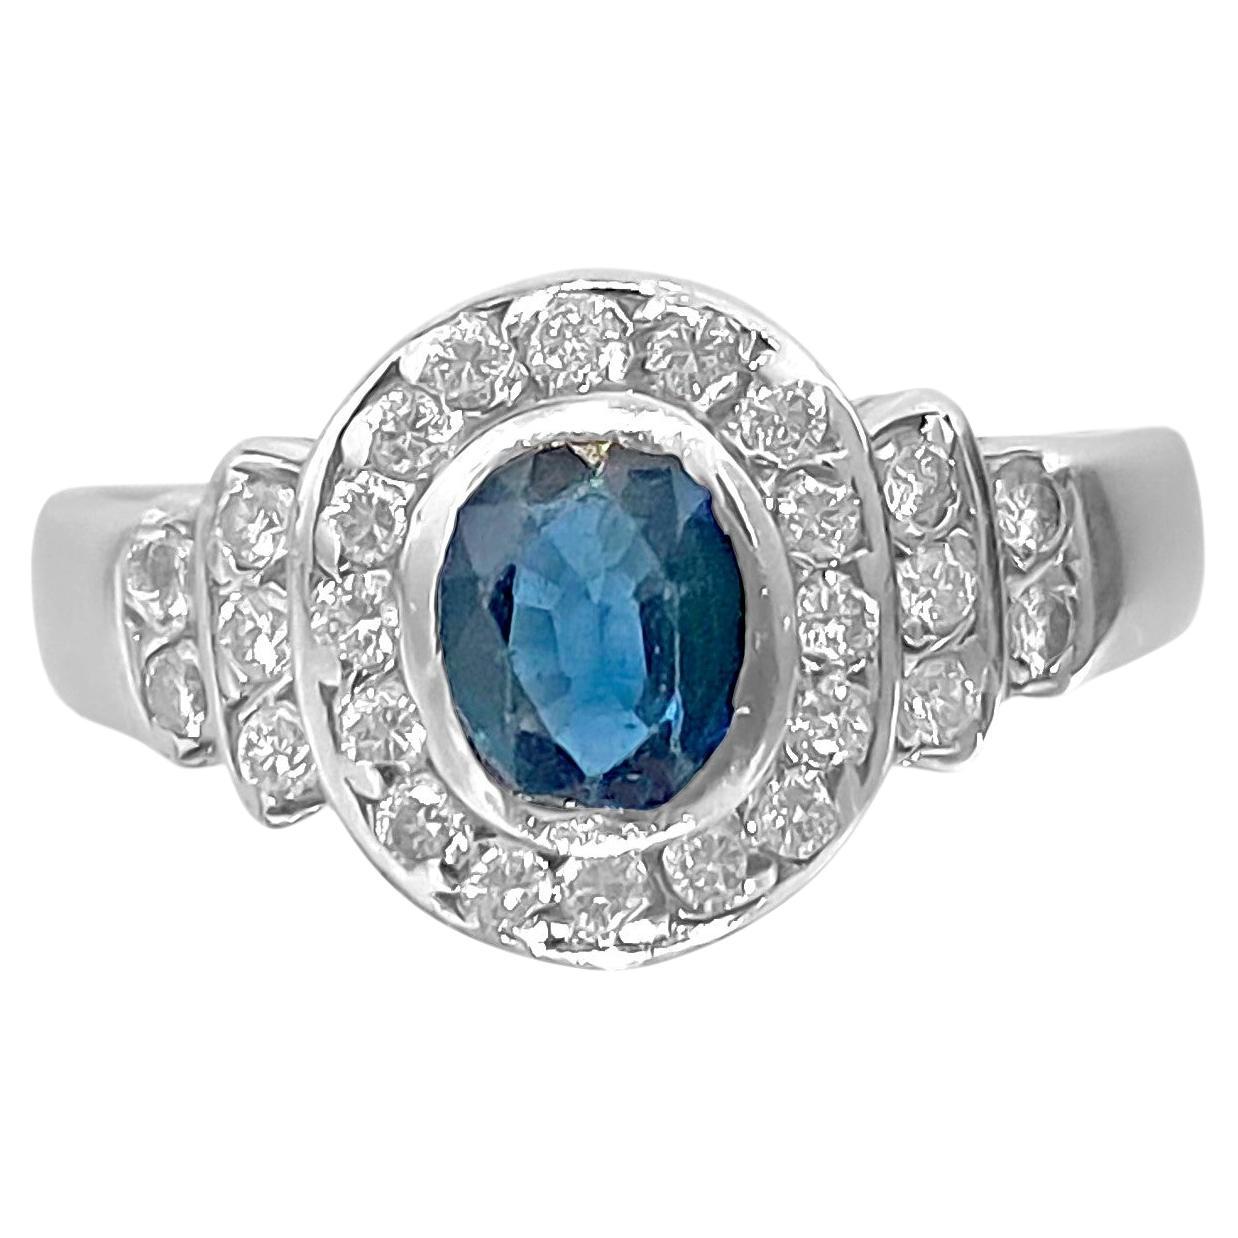 Contemporary 2.75 Carat Blue Sapphire Diamond Cocktail Ring